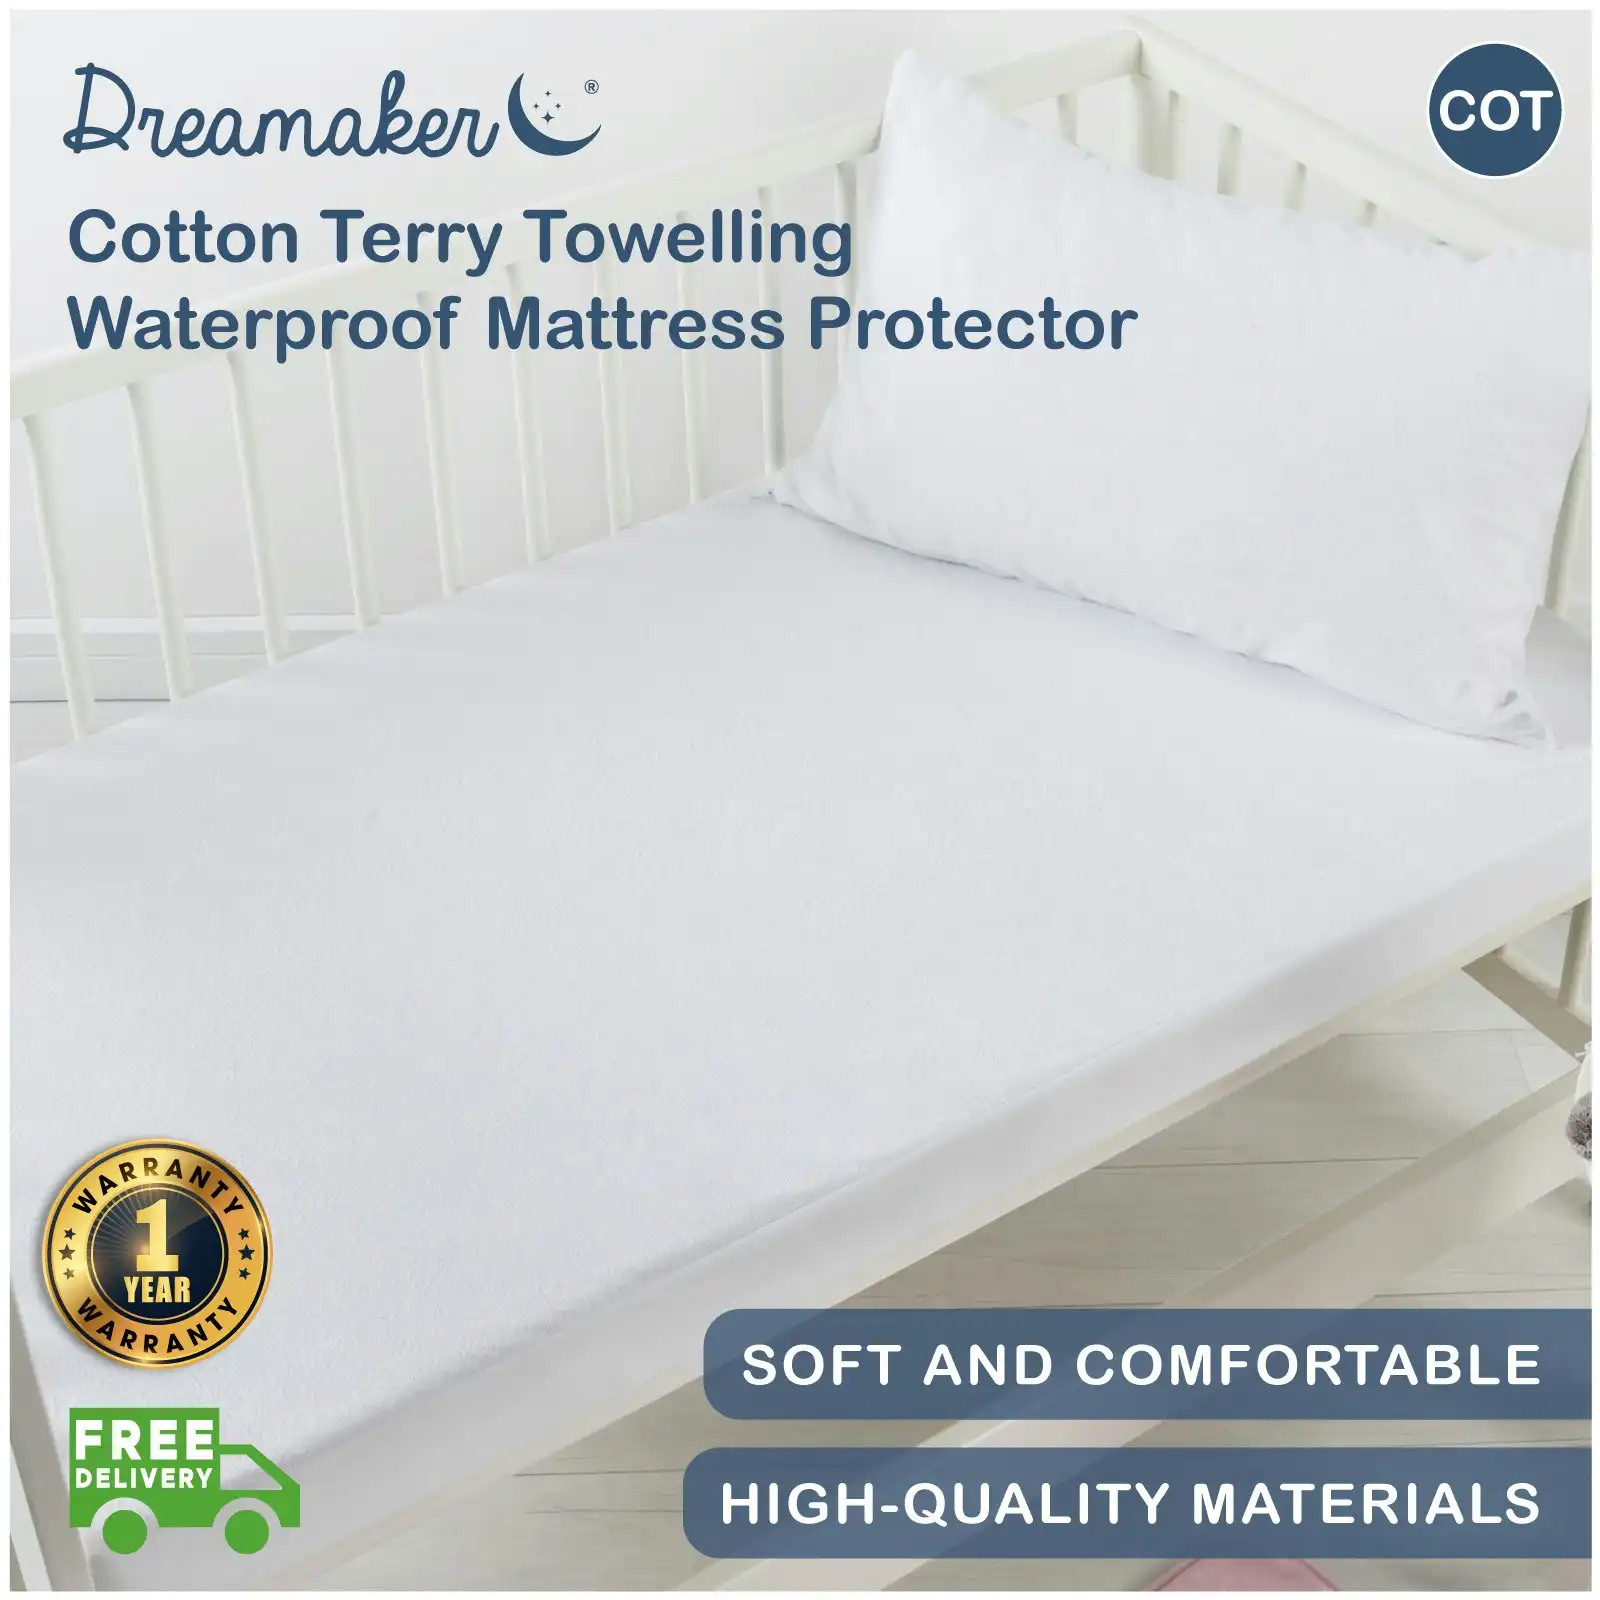 Dreamaker Cotton Terry Towelling Waterproof Mattress Protector - Cot Standard